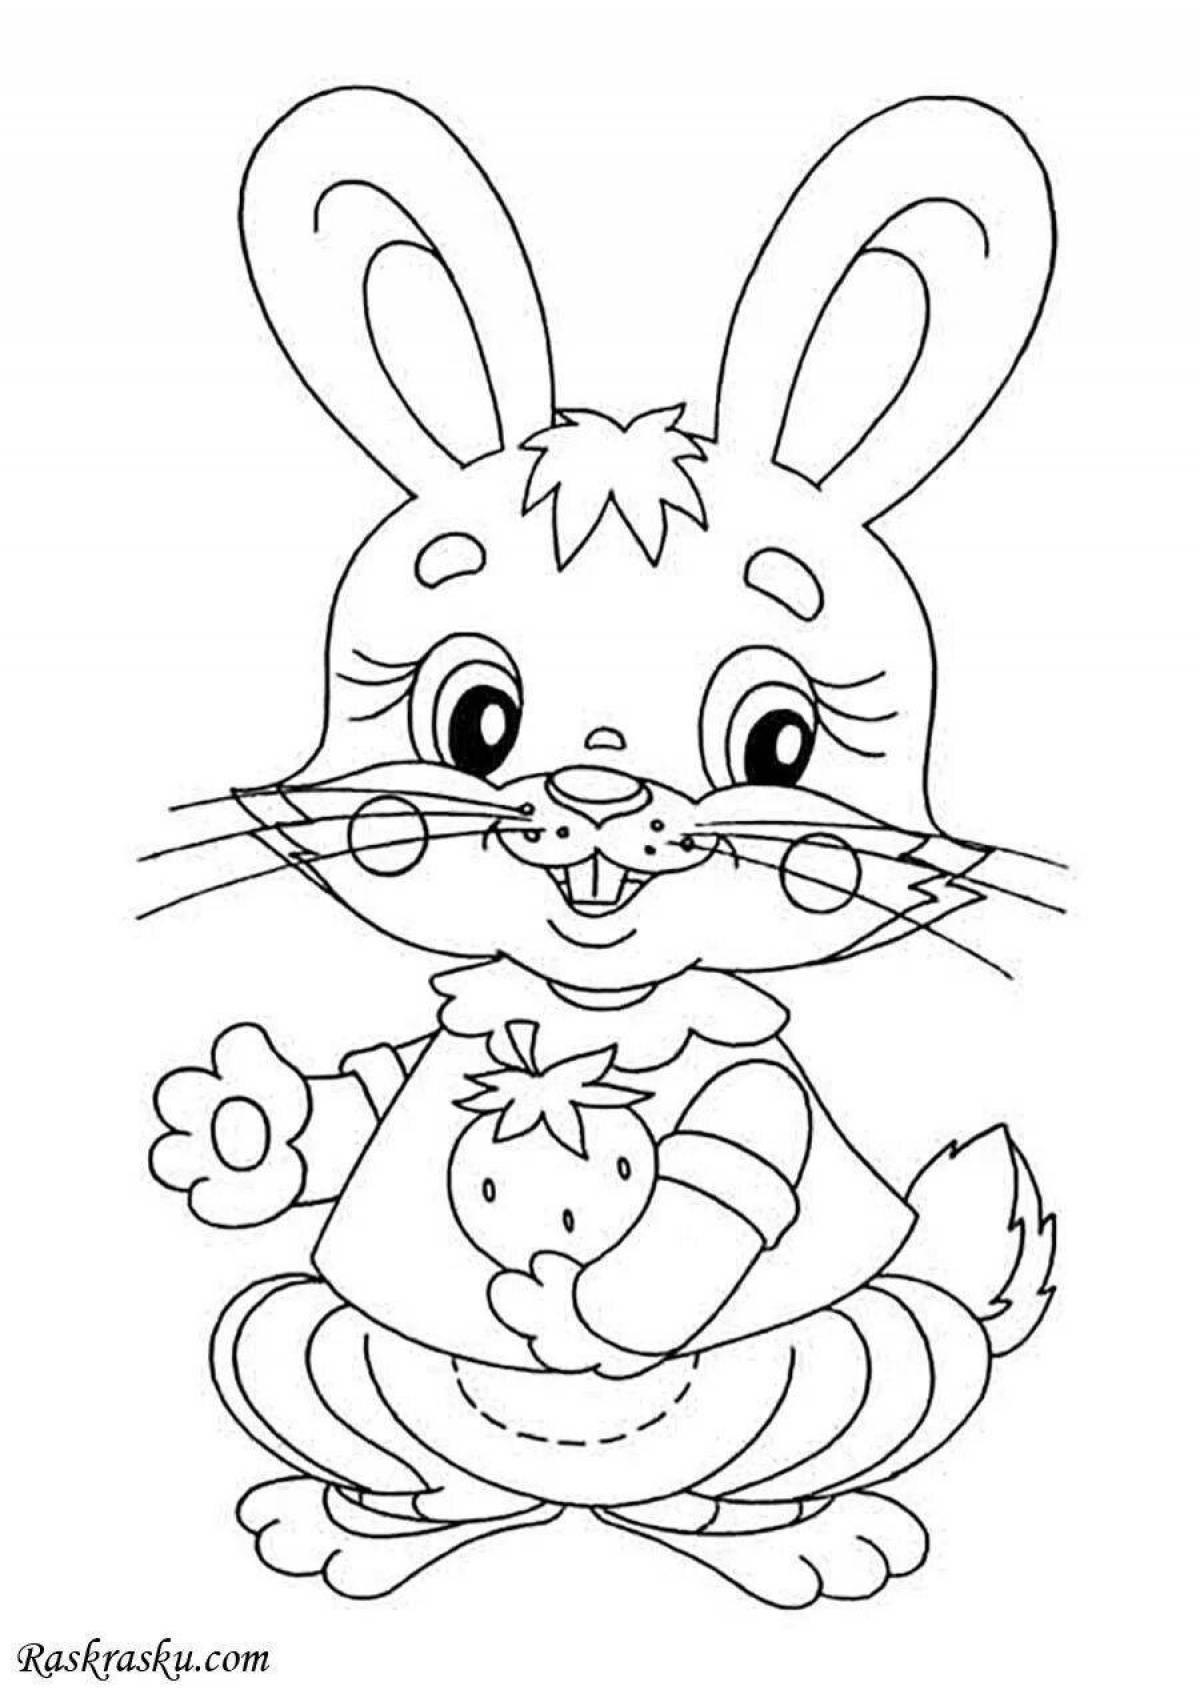 Раскраска зверята распечатать. Раскраска зайчик. Заяц раскраска для детей. Зайчик раскраска для малышей. Раскраски для девочек зайчики.